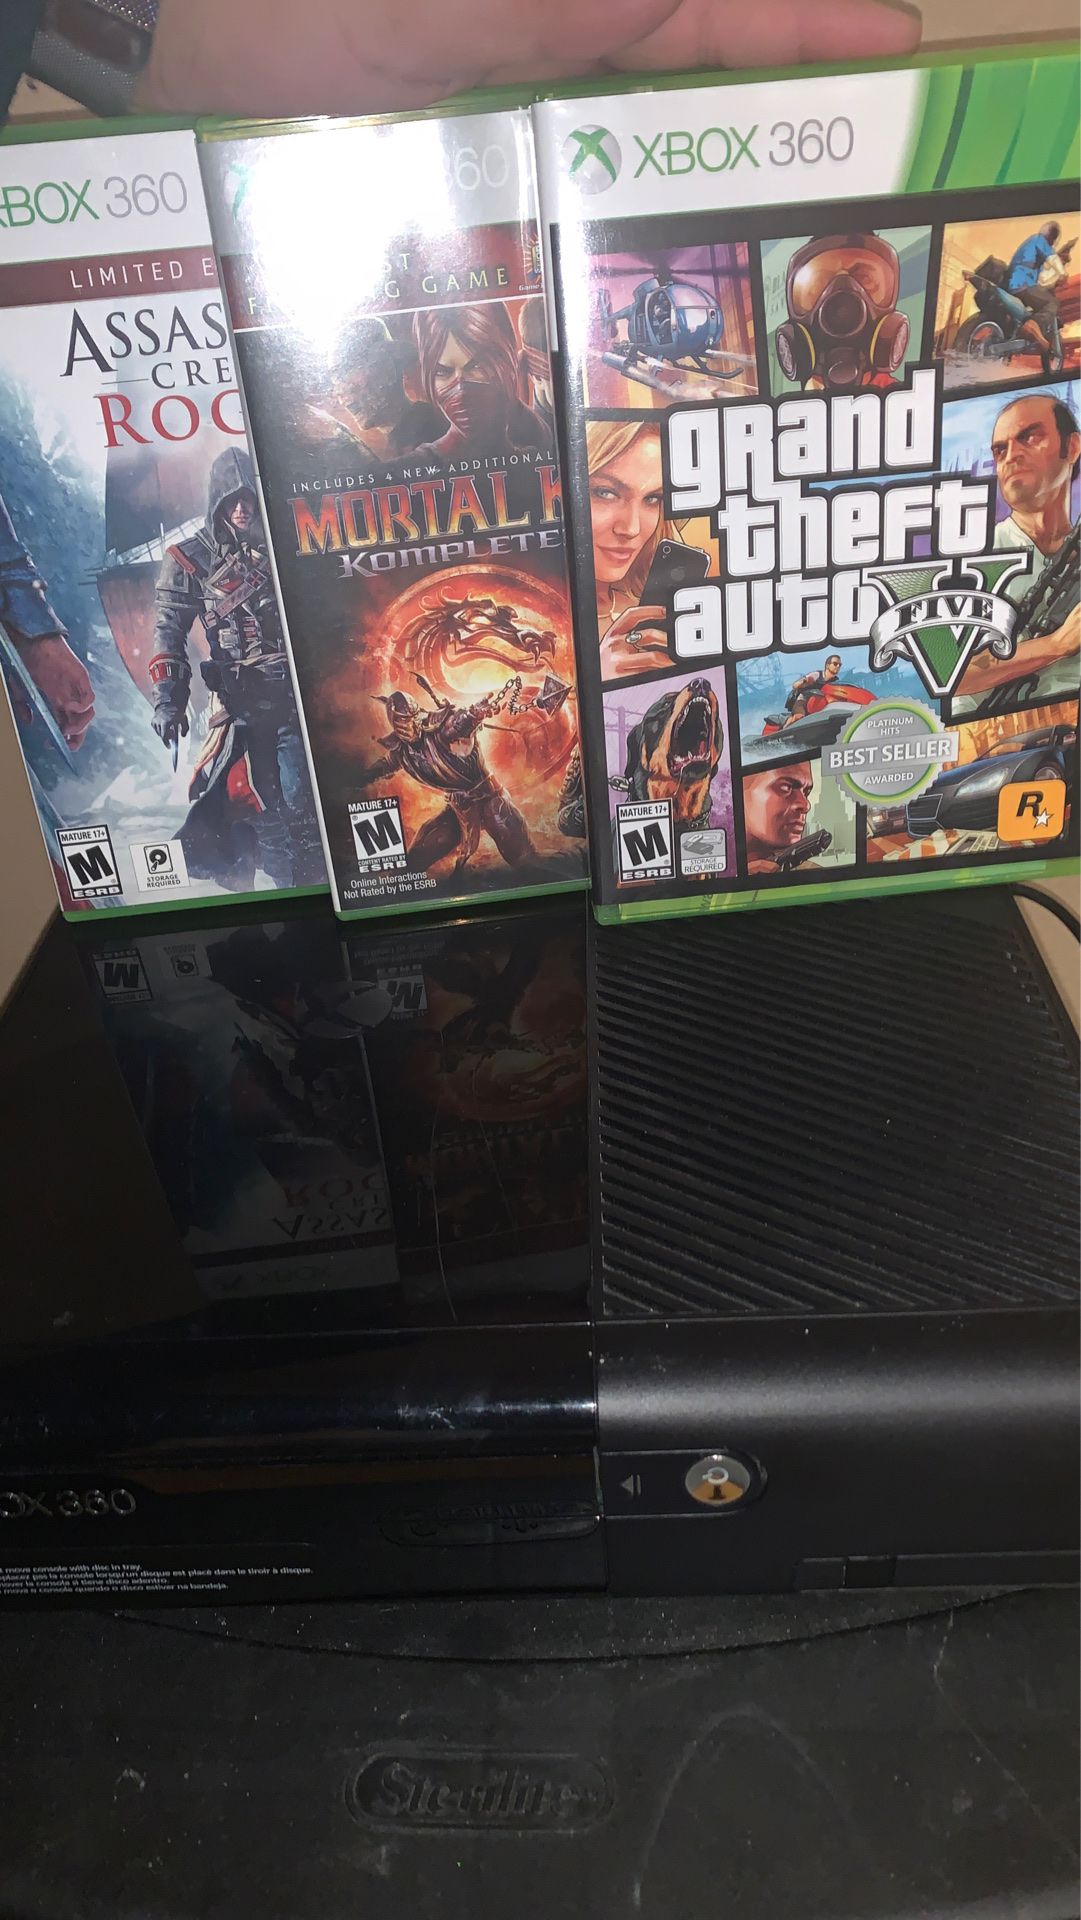 Xbox 360 w/ games